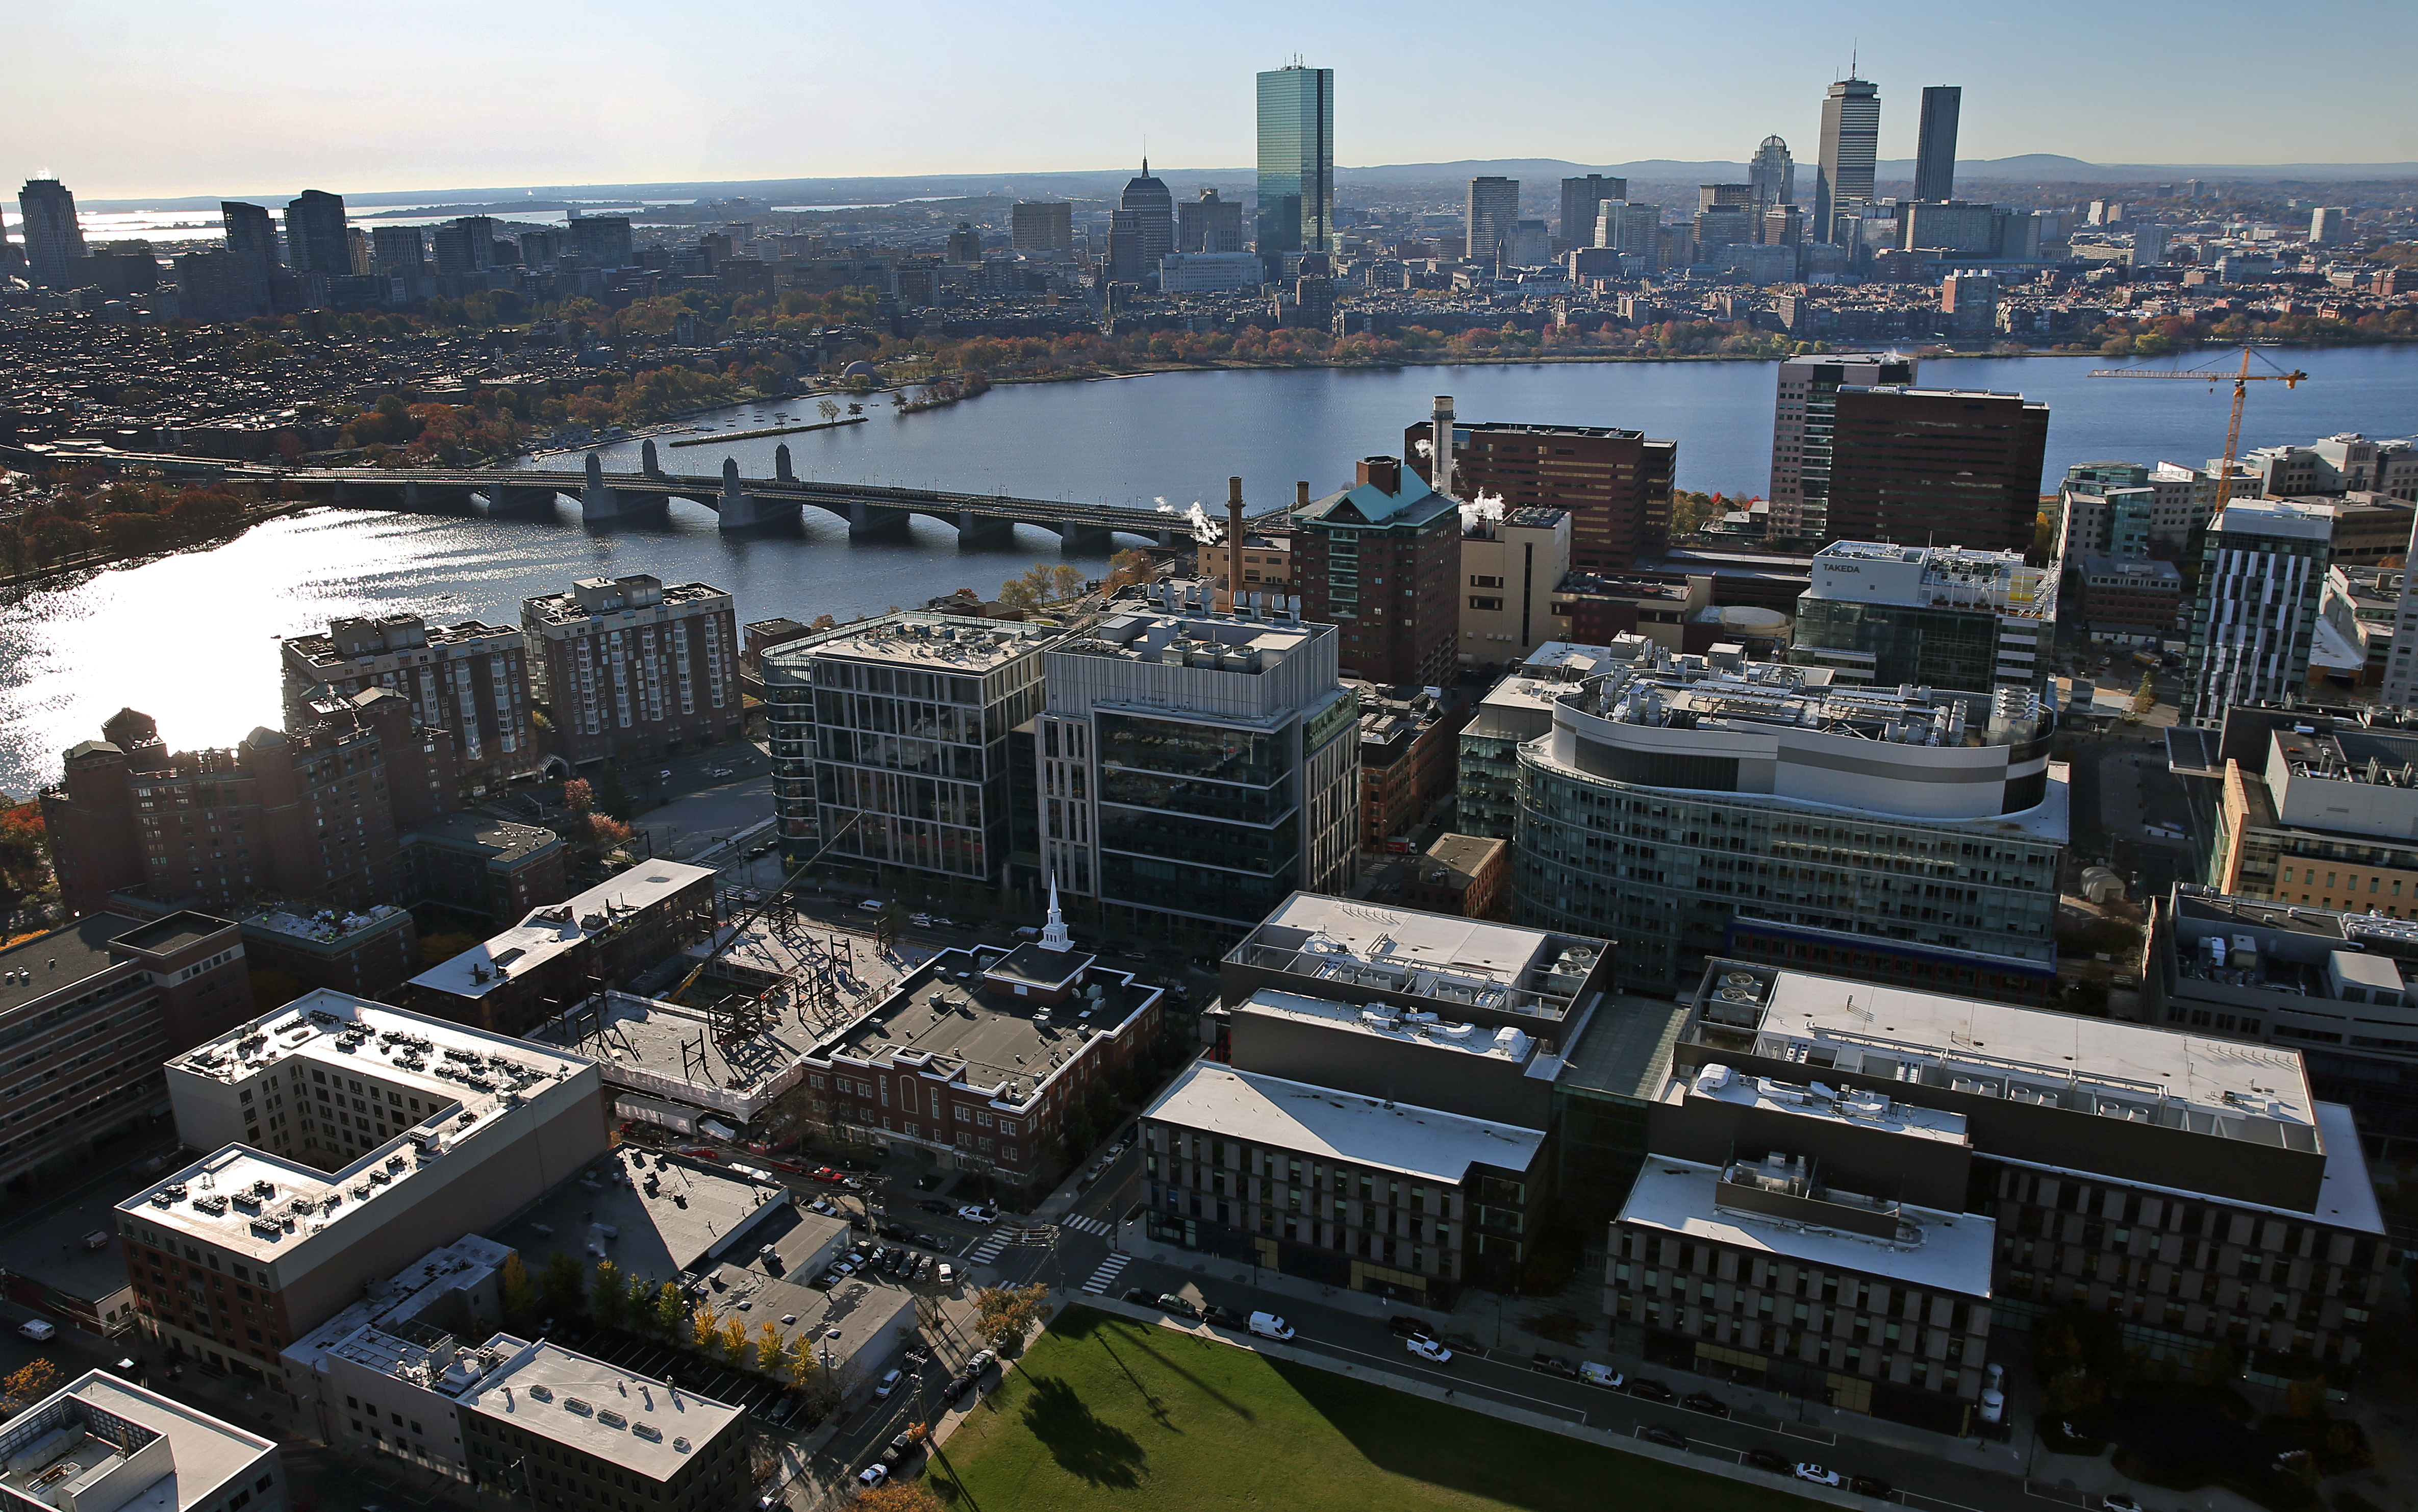 Luxury businesses find fertile ground in Boston - The Boston Globe